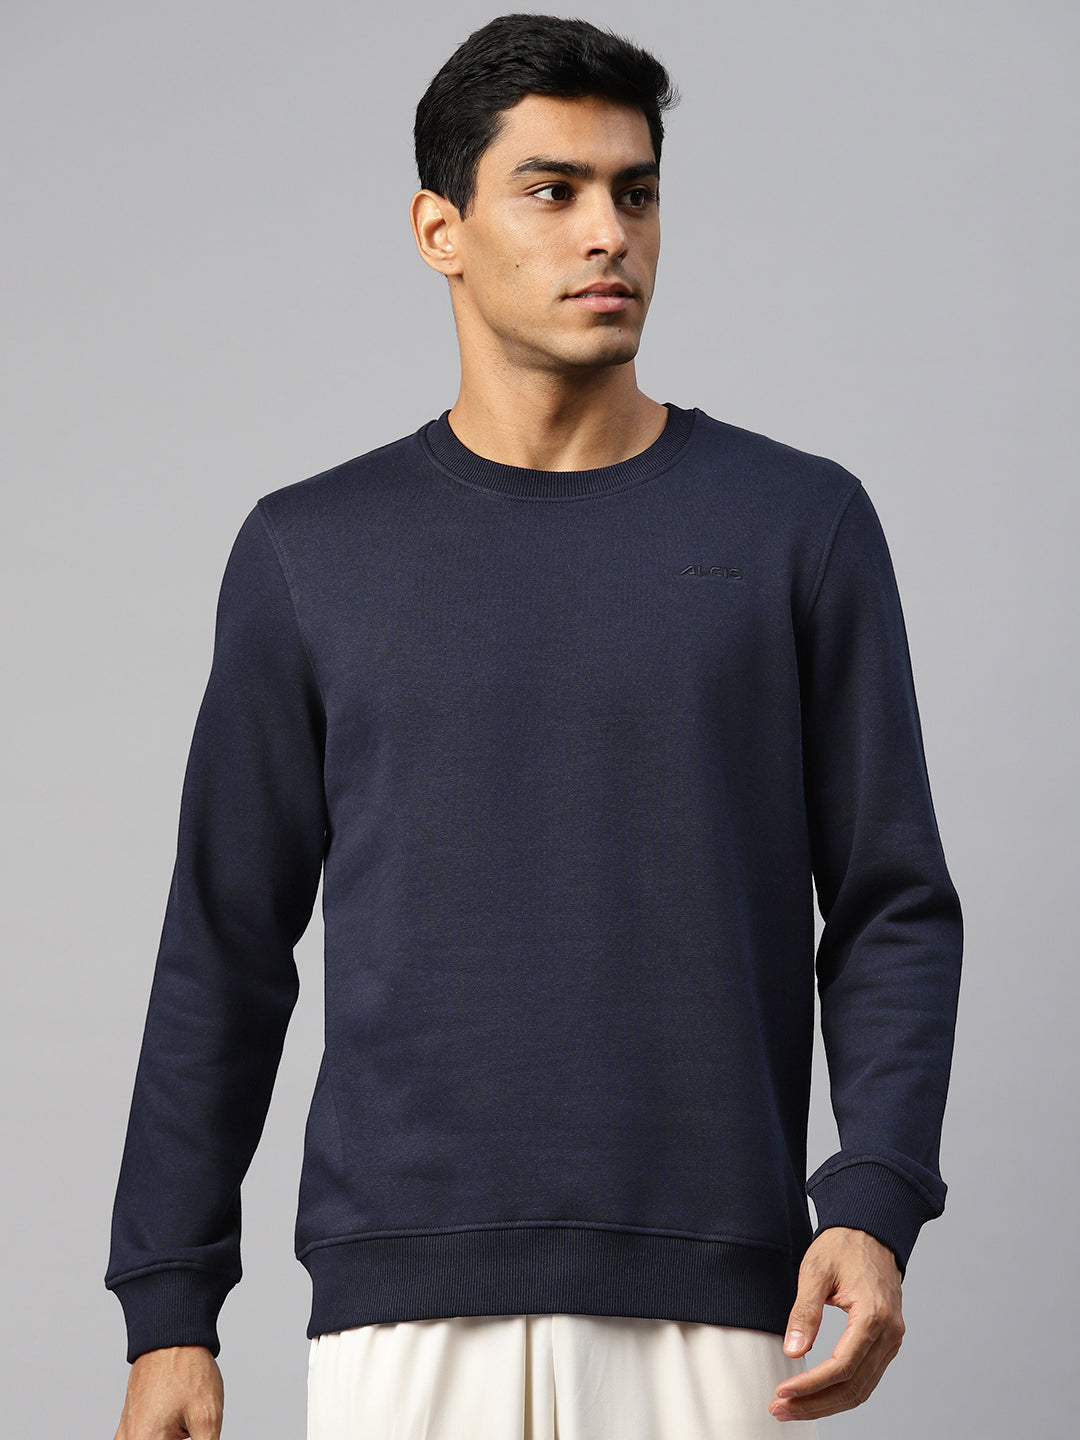 Alcis Men Solid Pullover Sweatshirt